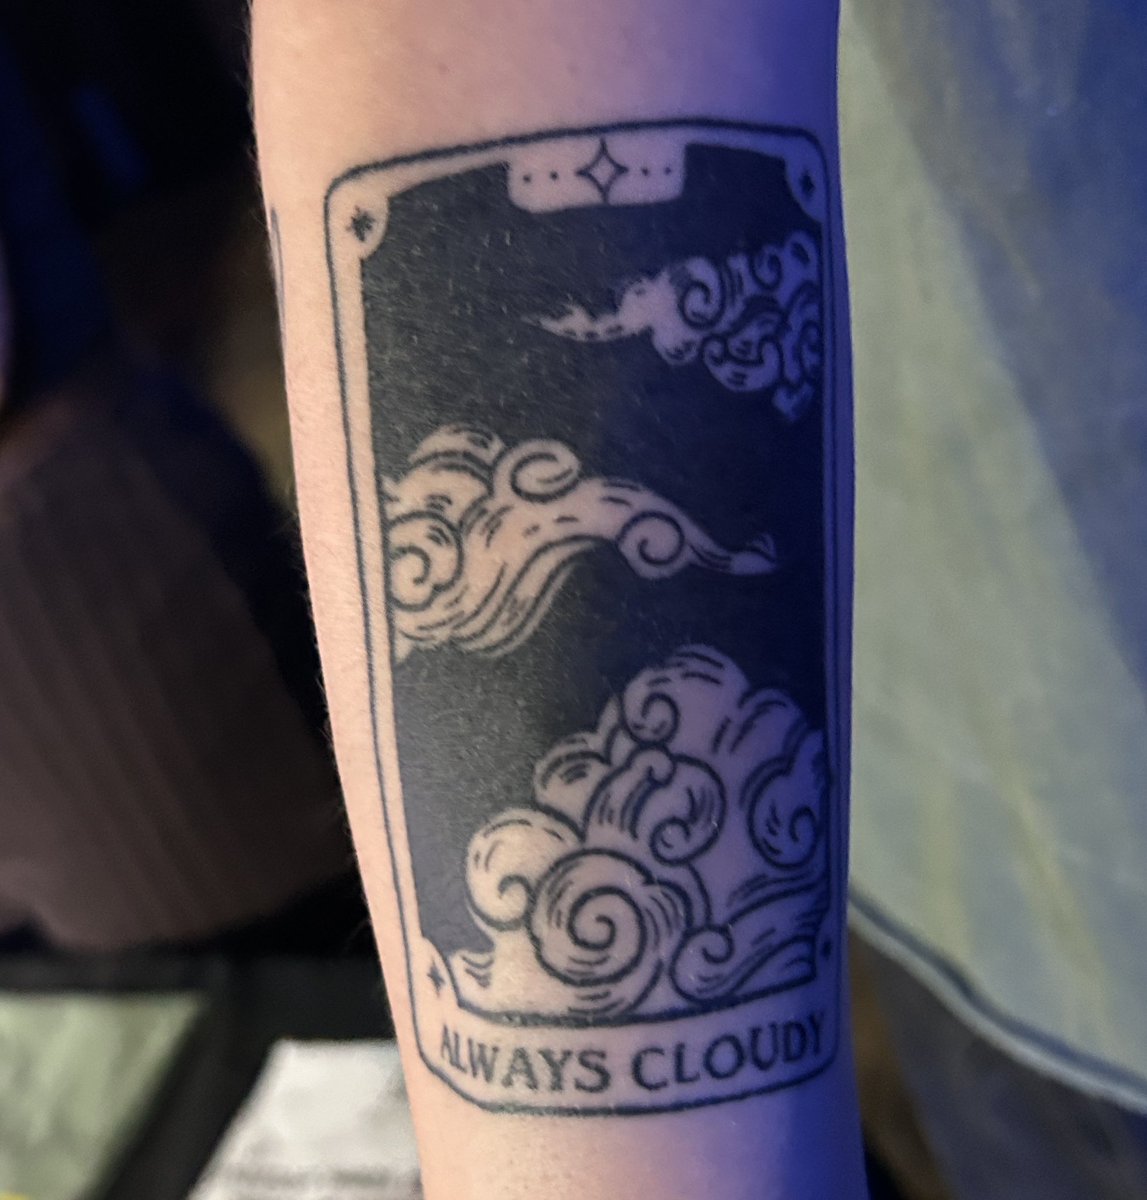 always cloudy tattoo from last night